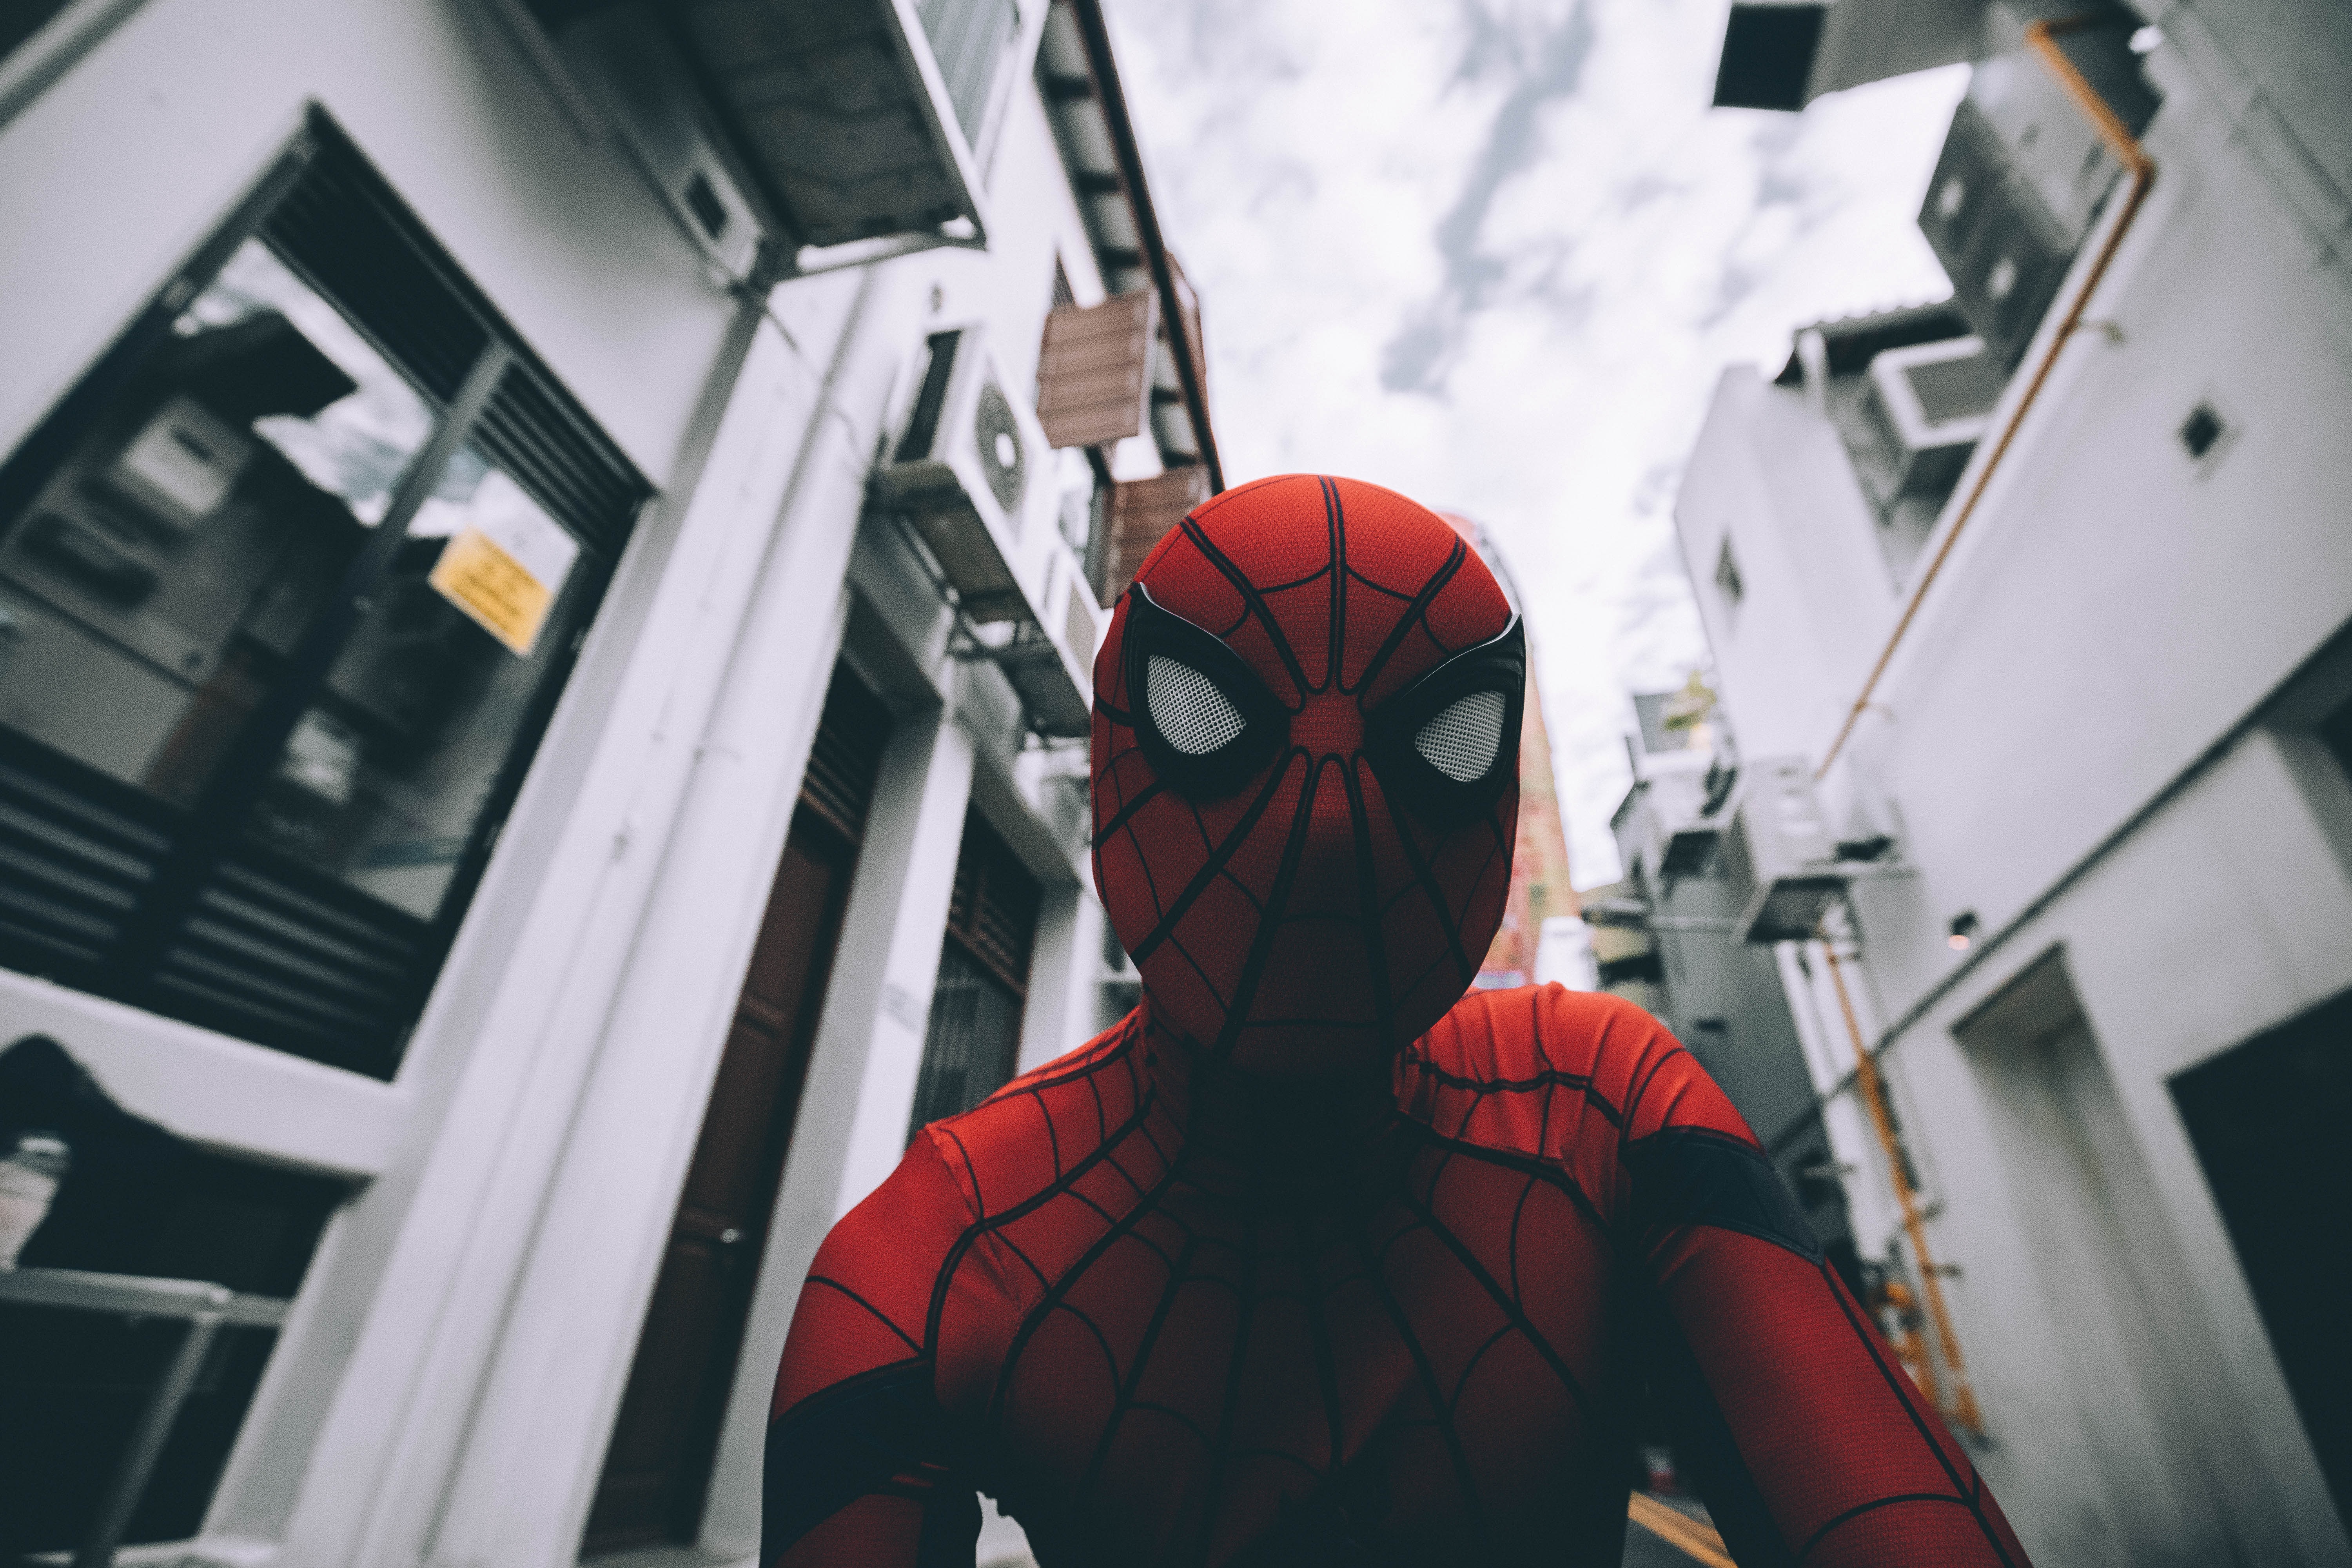 Spiderman seen between two buildings